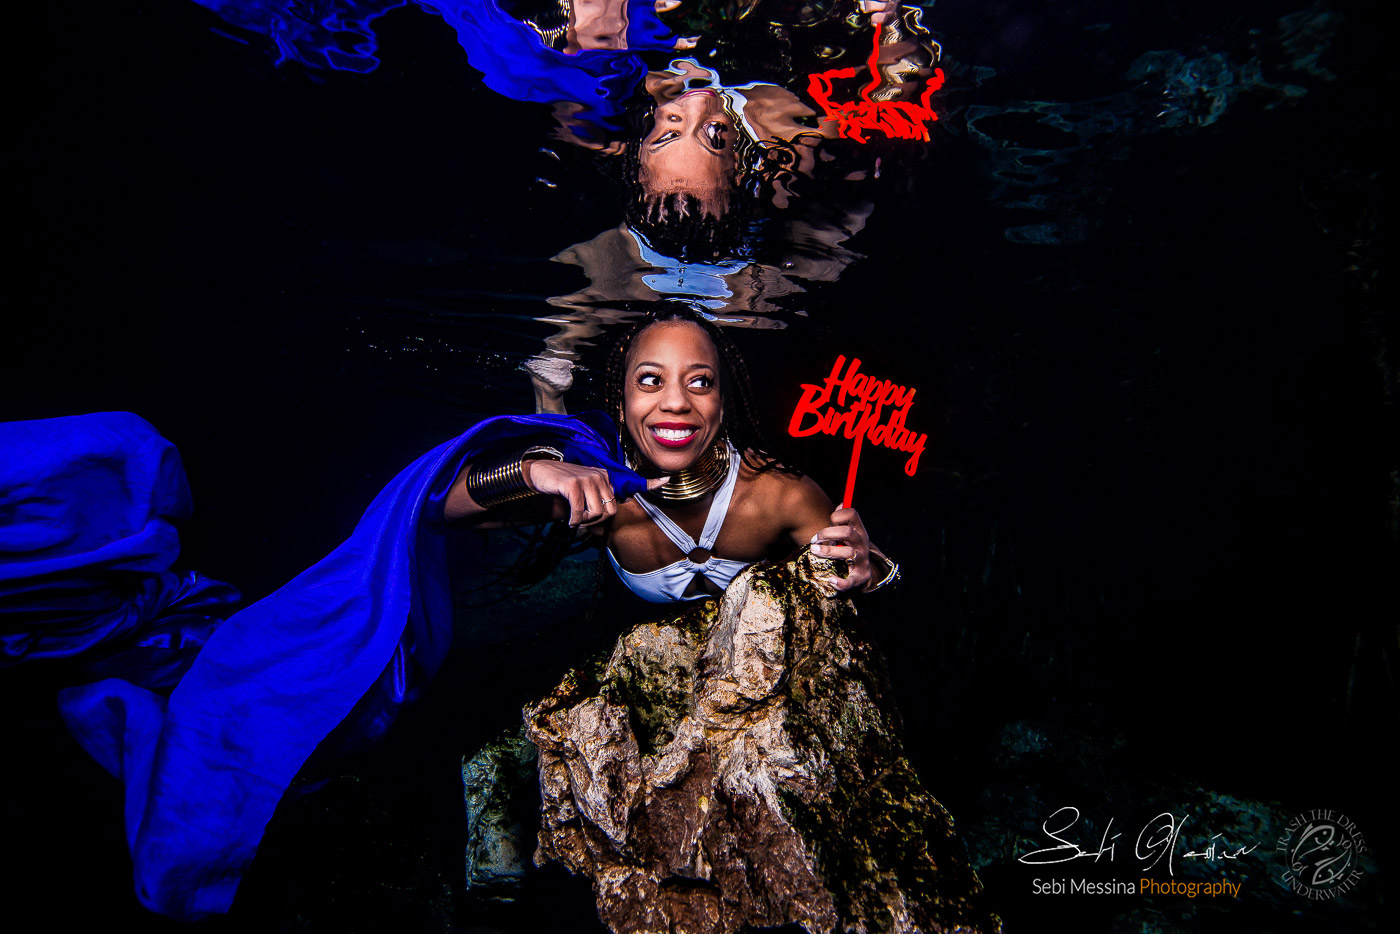 Underwater Cenote Photographer Tulum – Underwater Modeling Mexico - Sebi Messina Photography